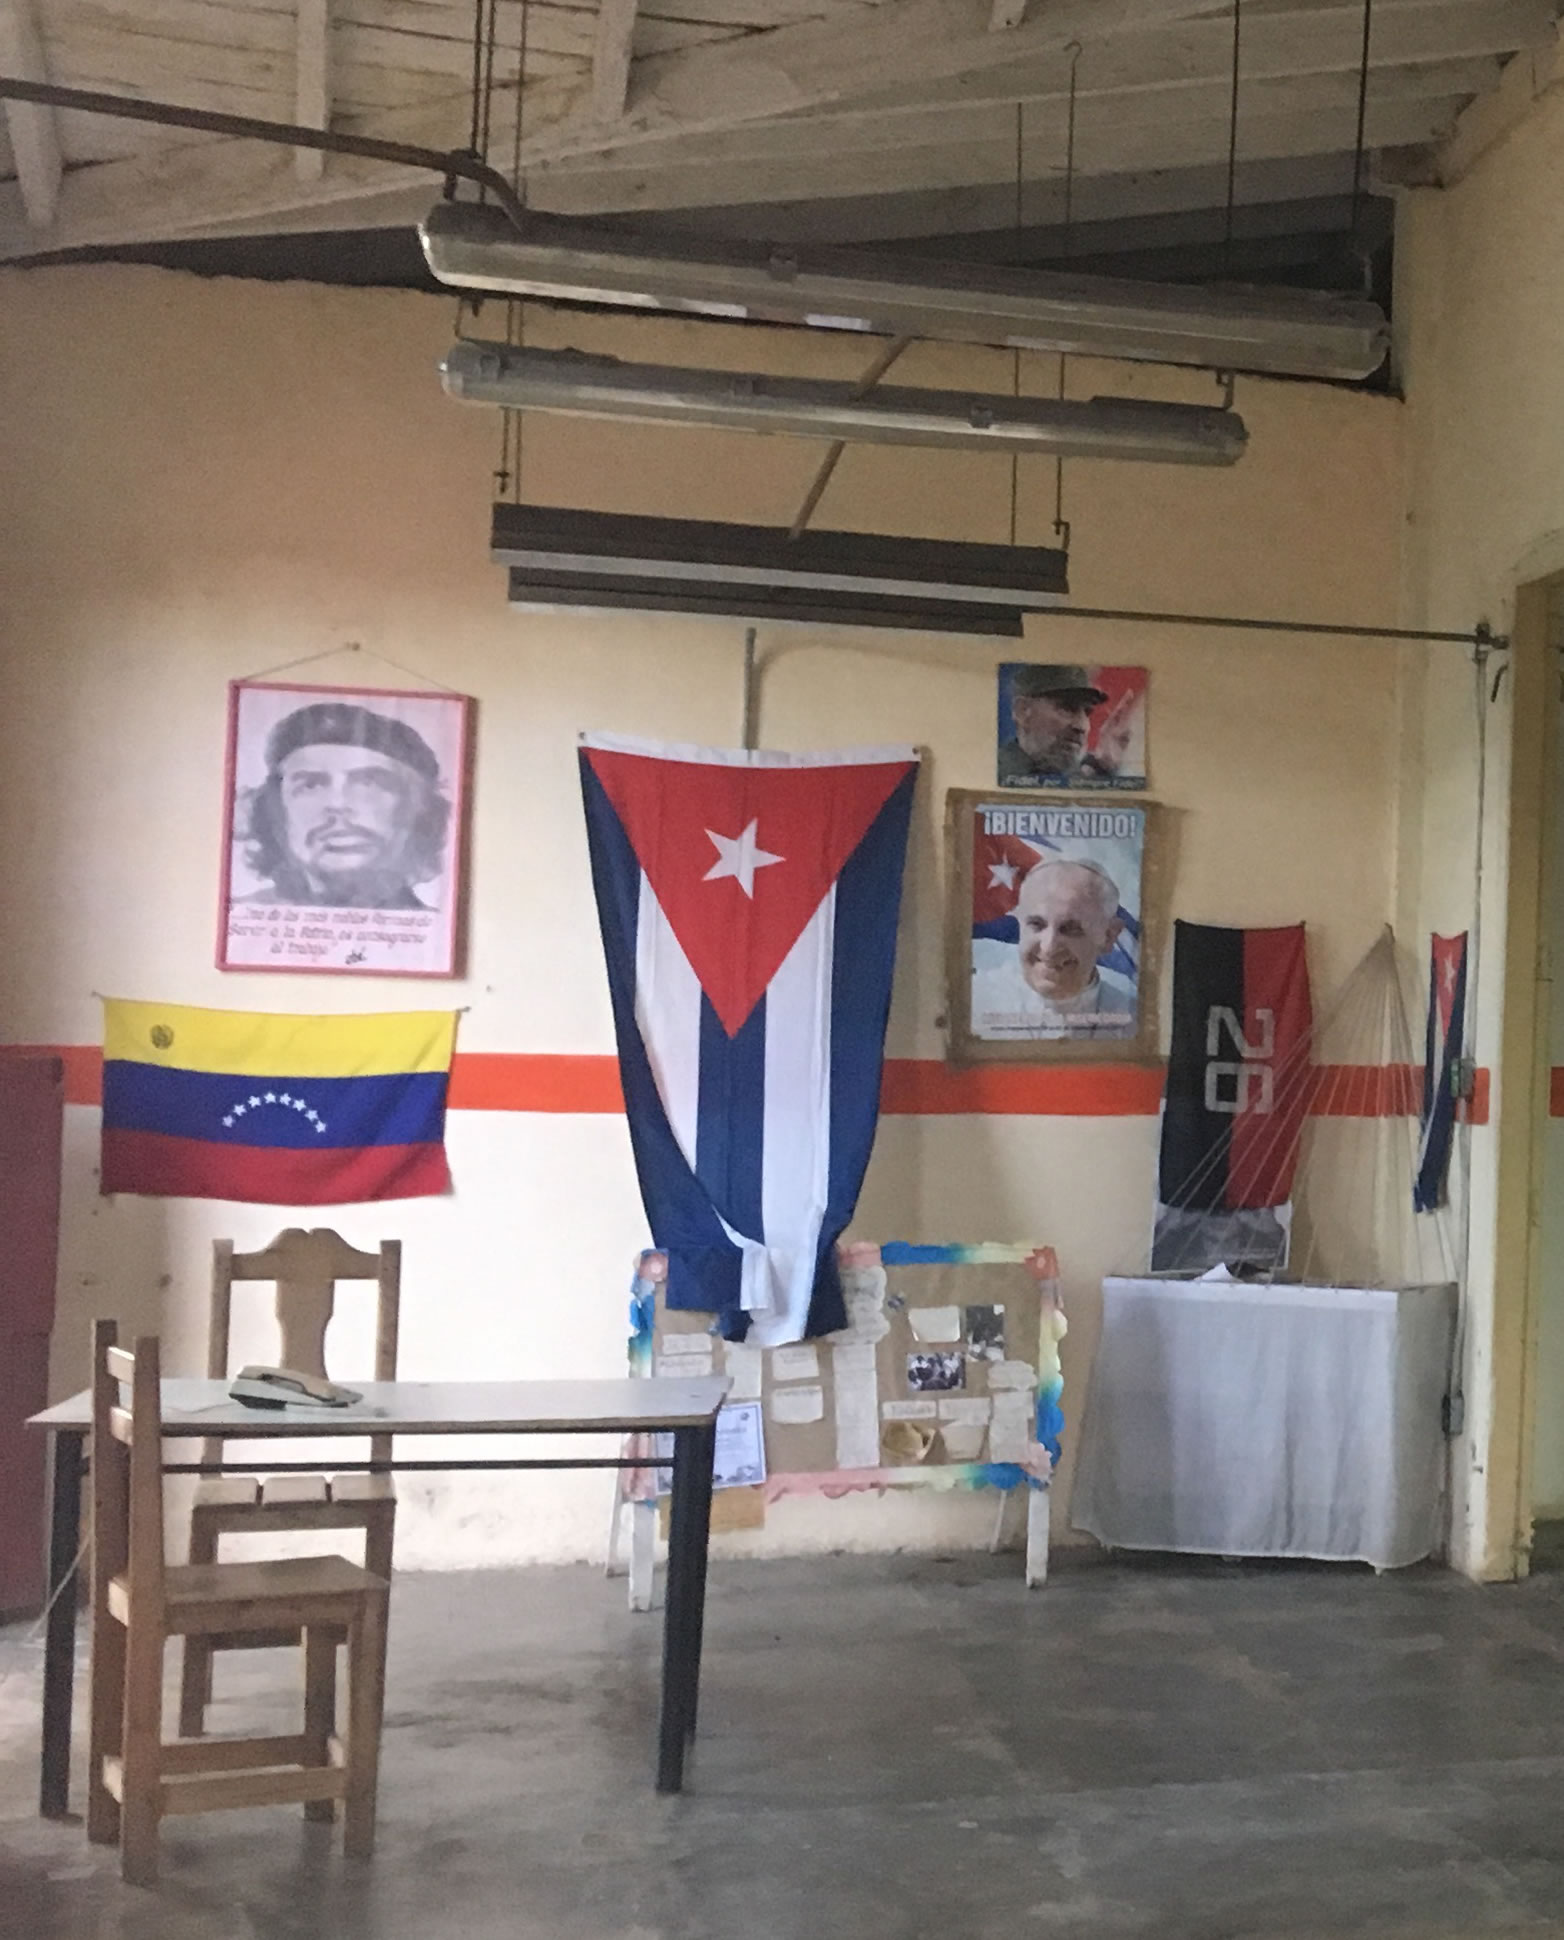 Cuba Flag, Pride, Workshop, Accounting Play